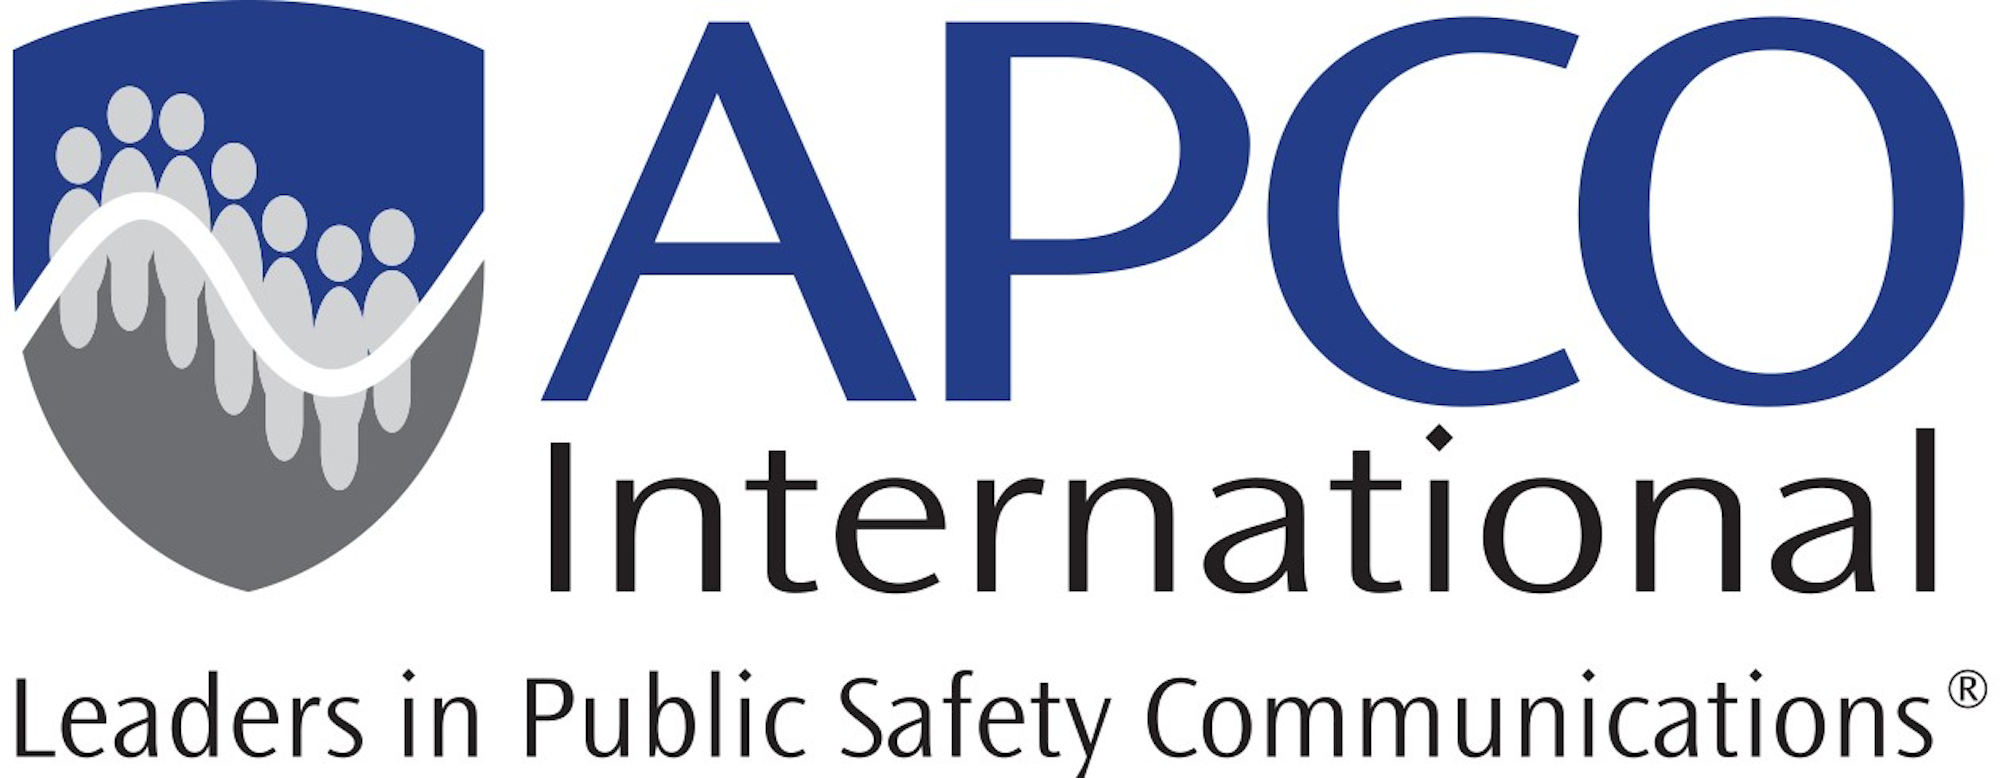 APCO Celebrates National Public Safety Week Officer